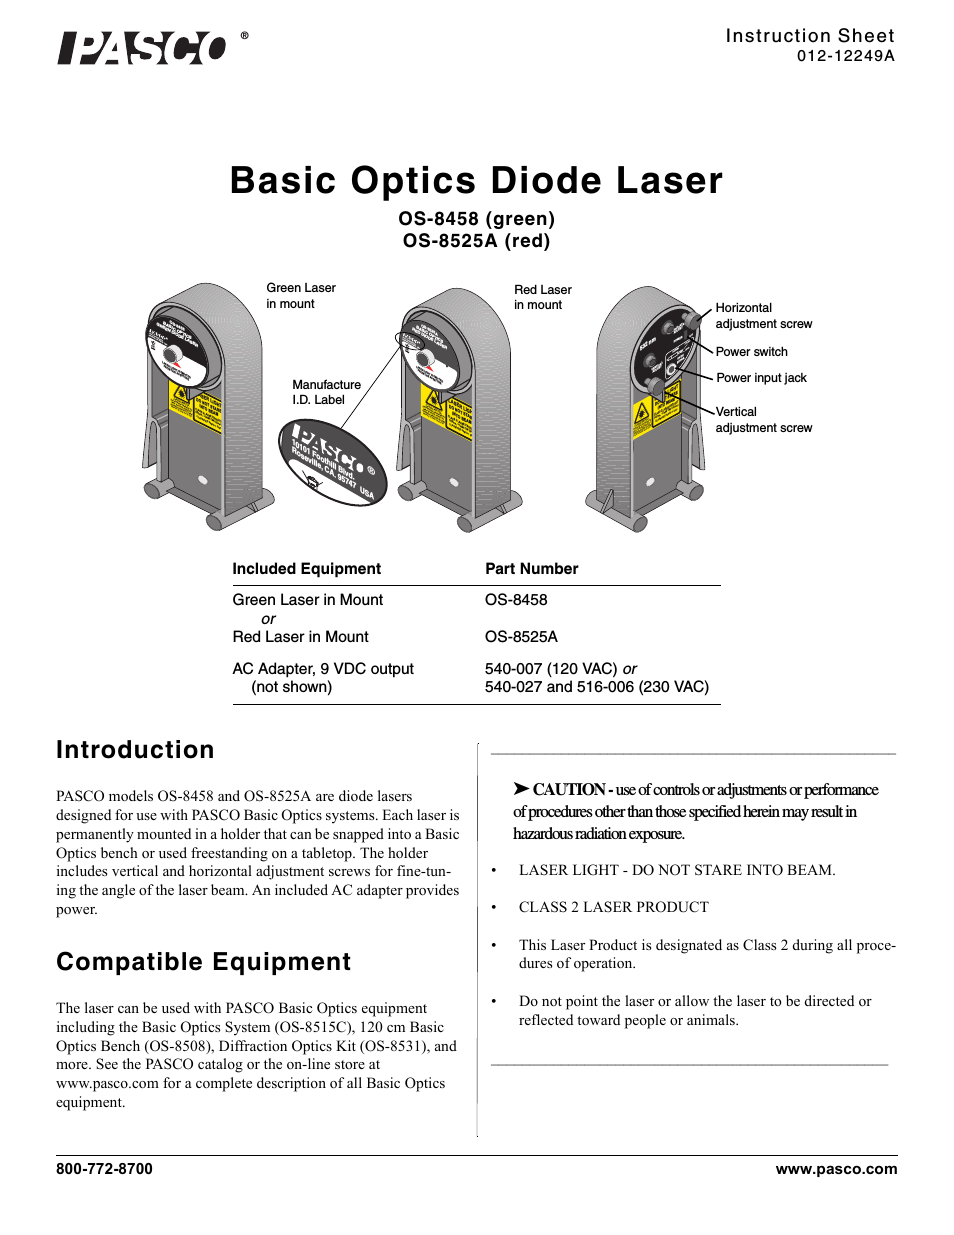 OS-8525A Basic Optics Diode Laser